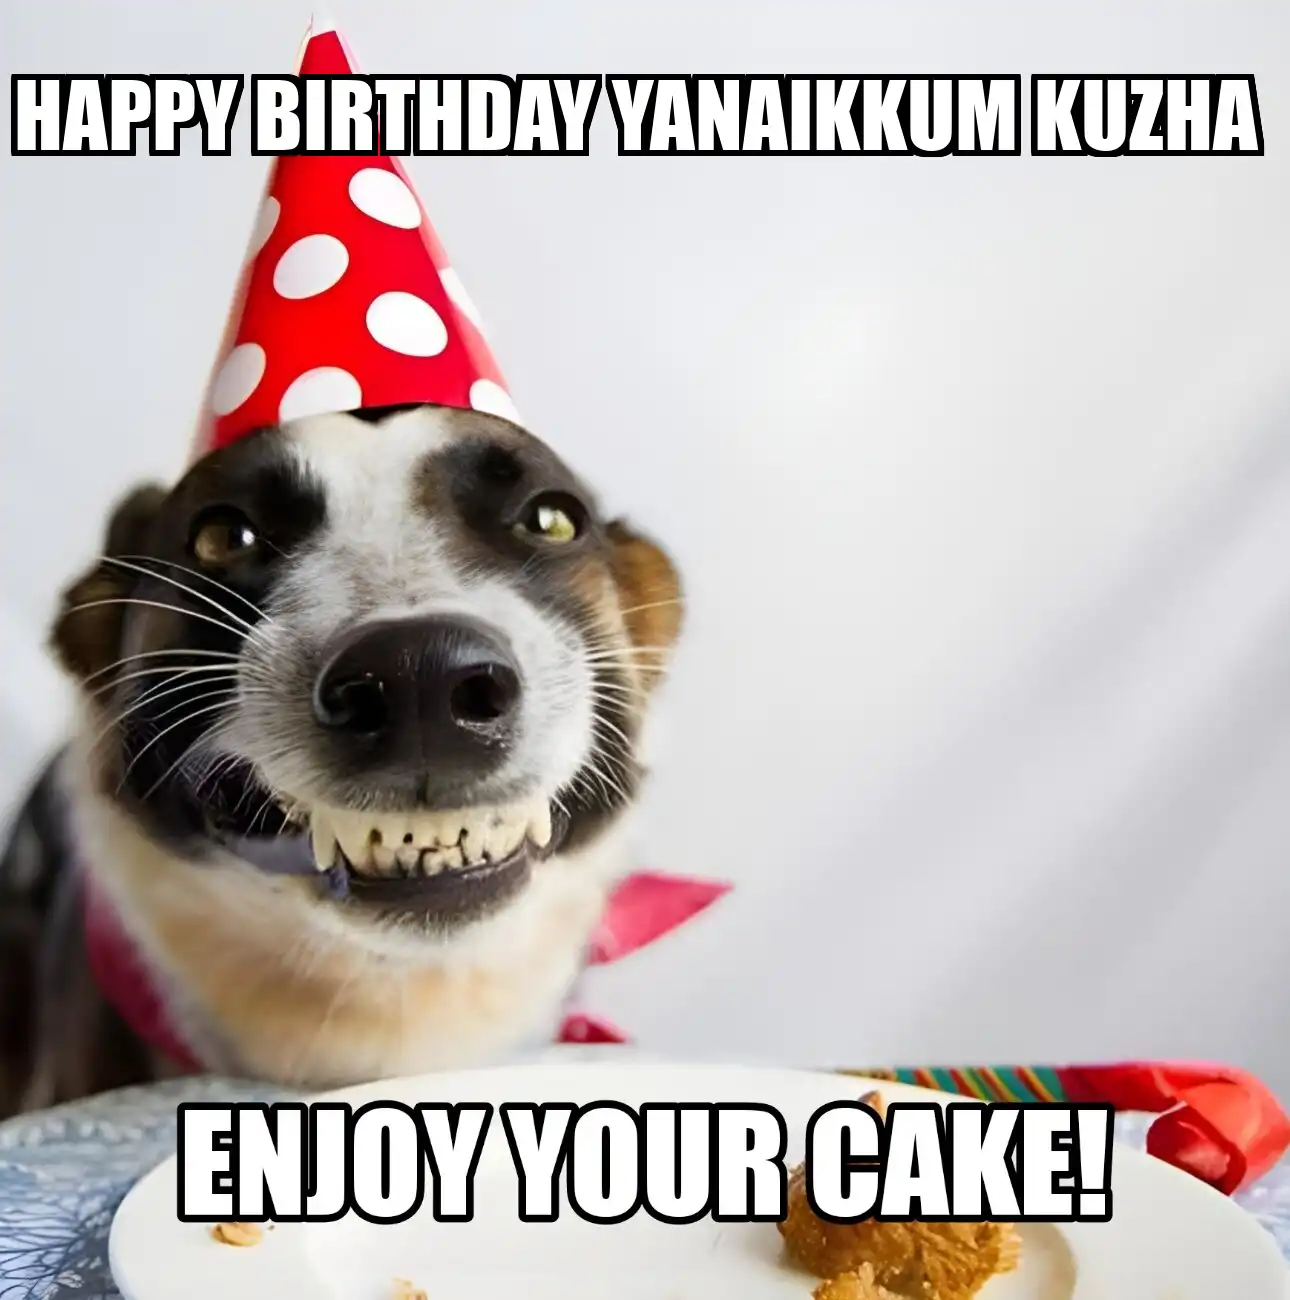 Happy Birthday Yanaikkum Kuzha Enjoy Your Cake Dog Meme